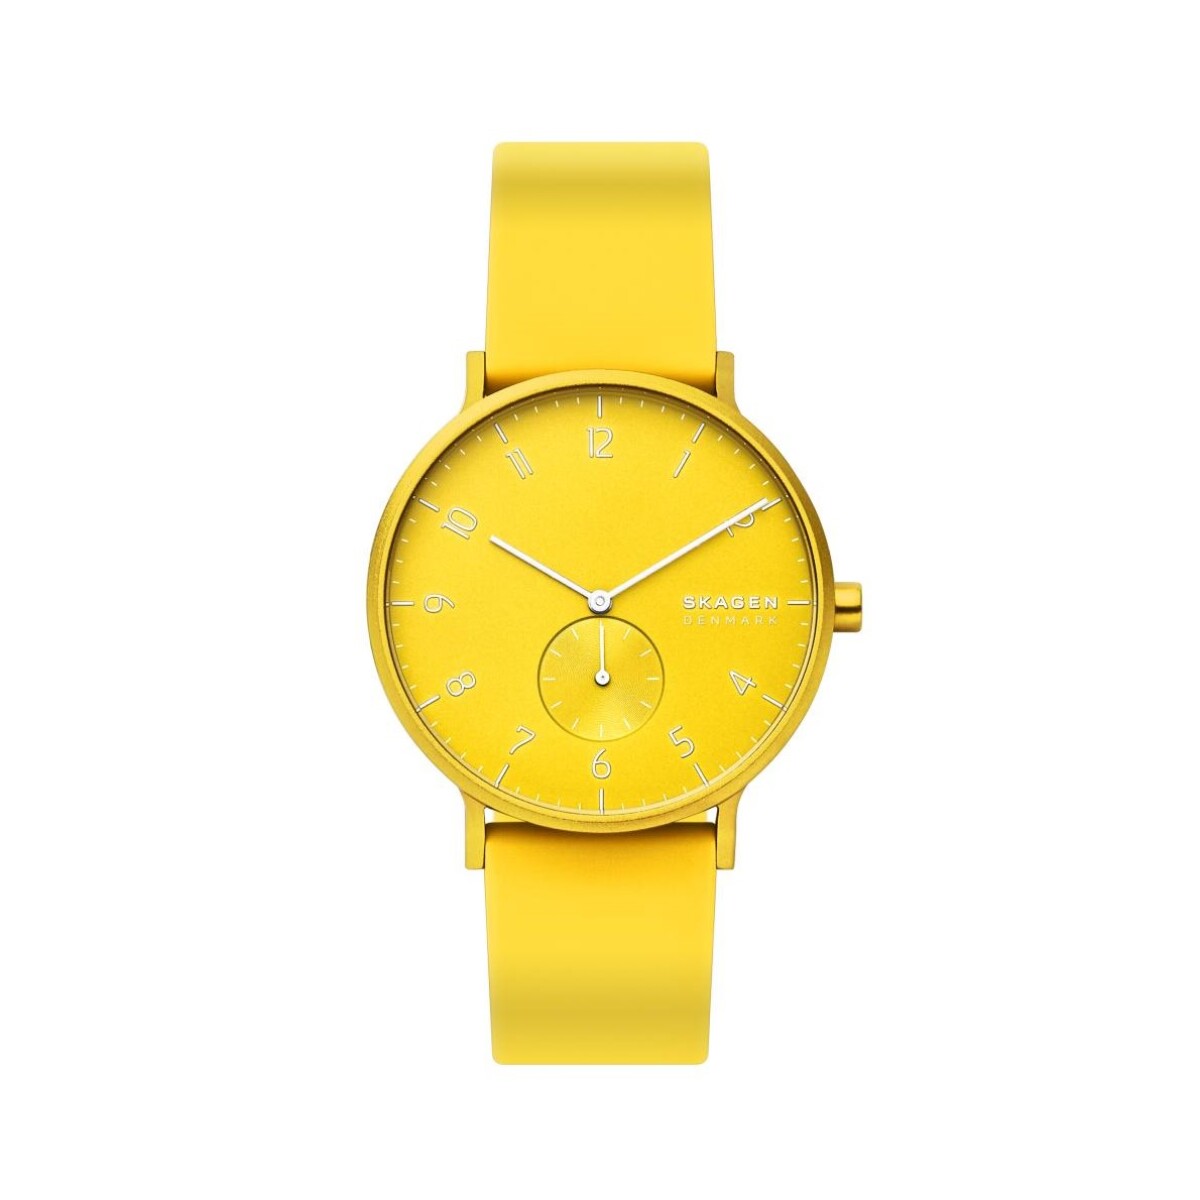 Reloj Skagen Deportivo/Fashion Silicona Amarillo Neon 